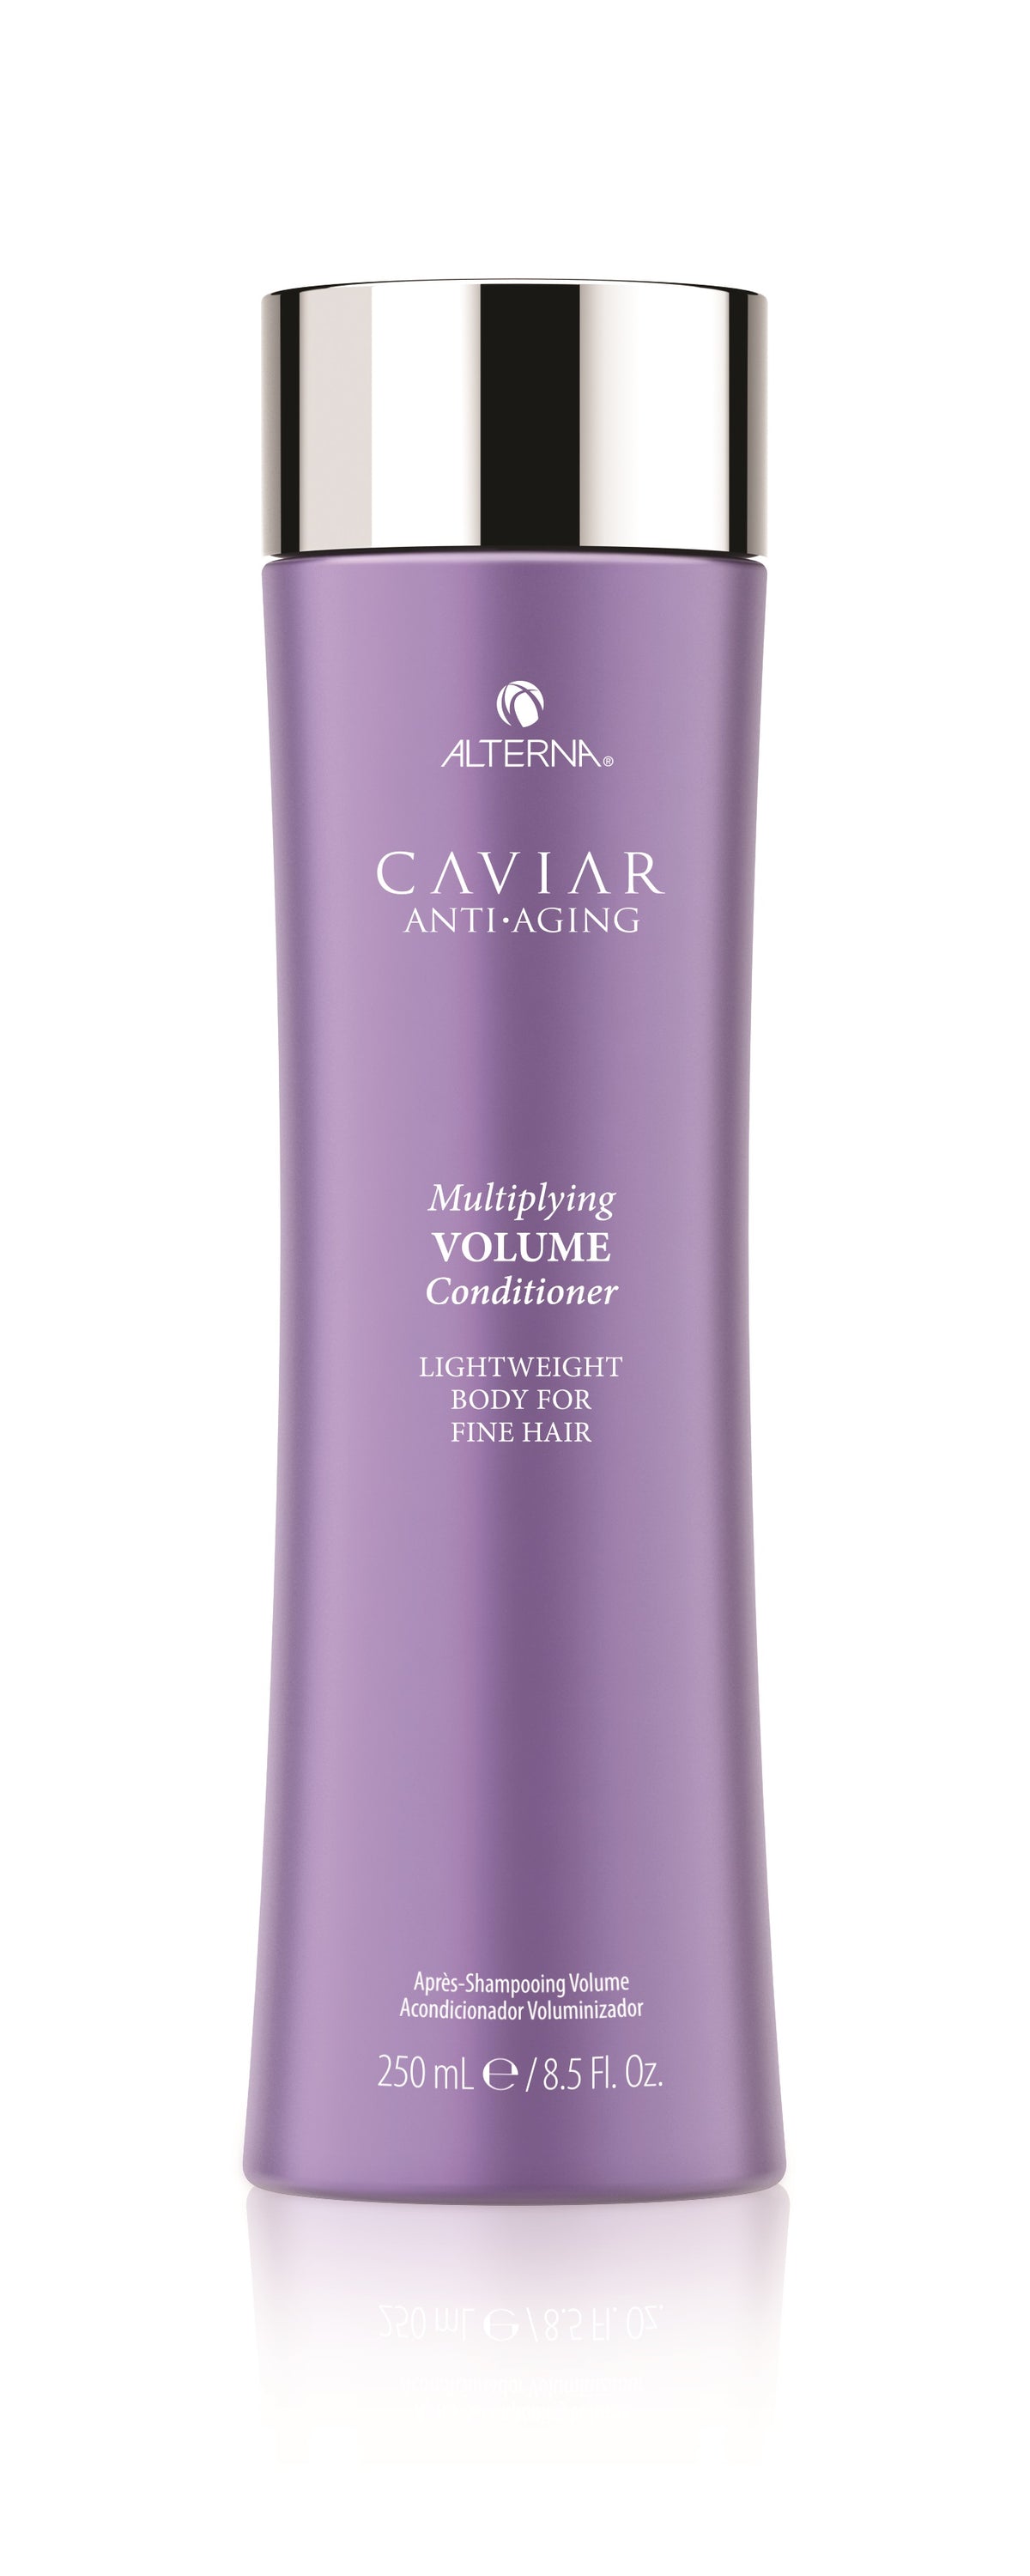 Alterna Caviar Anti-Aging Multiplying Volume Conditioner 250 ml